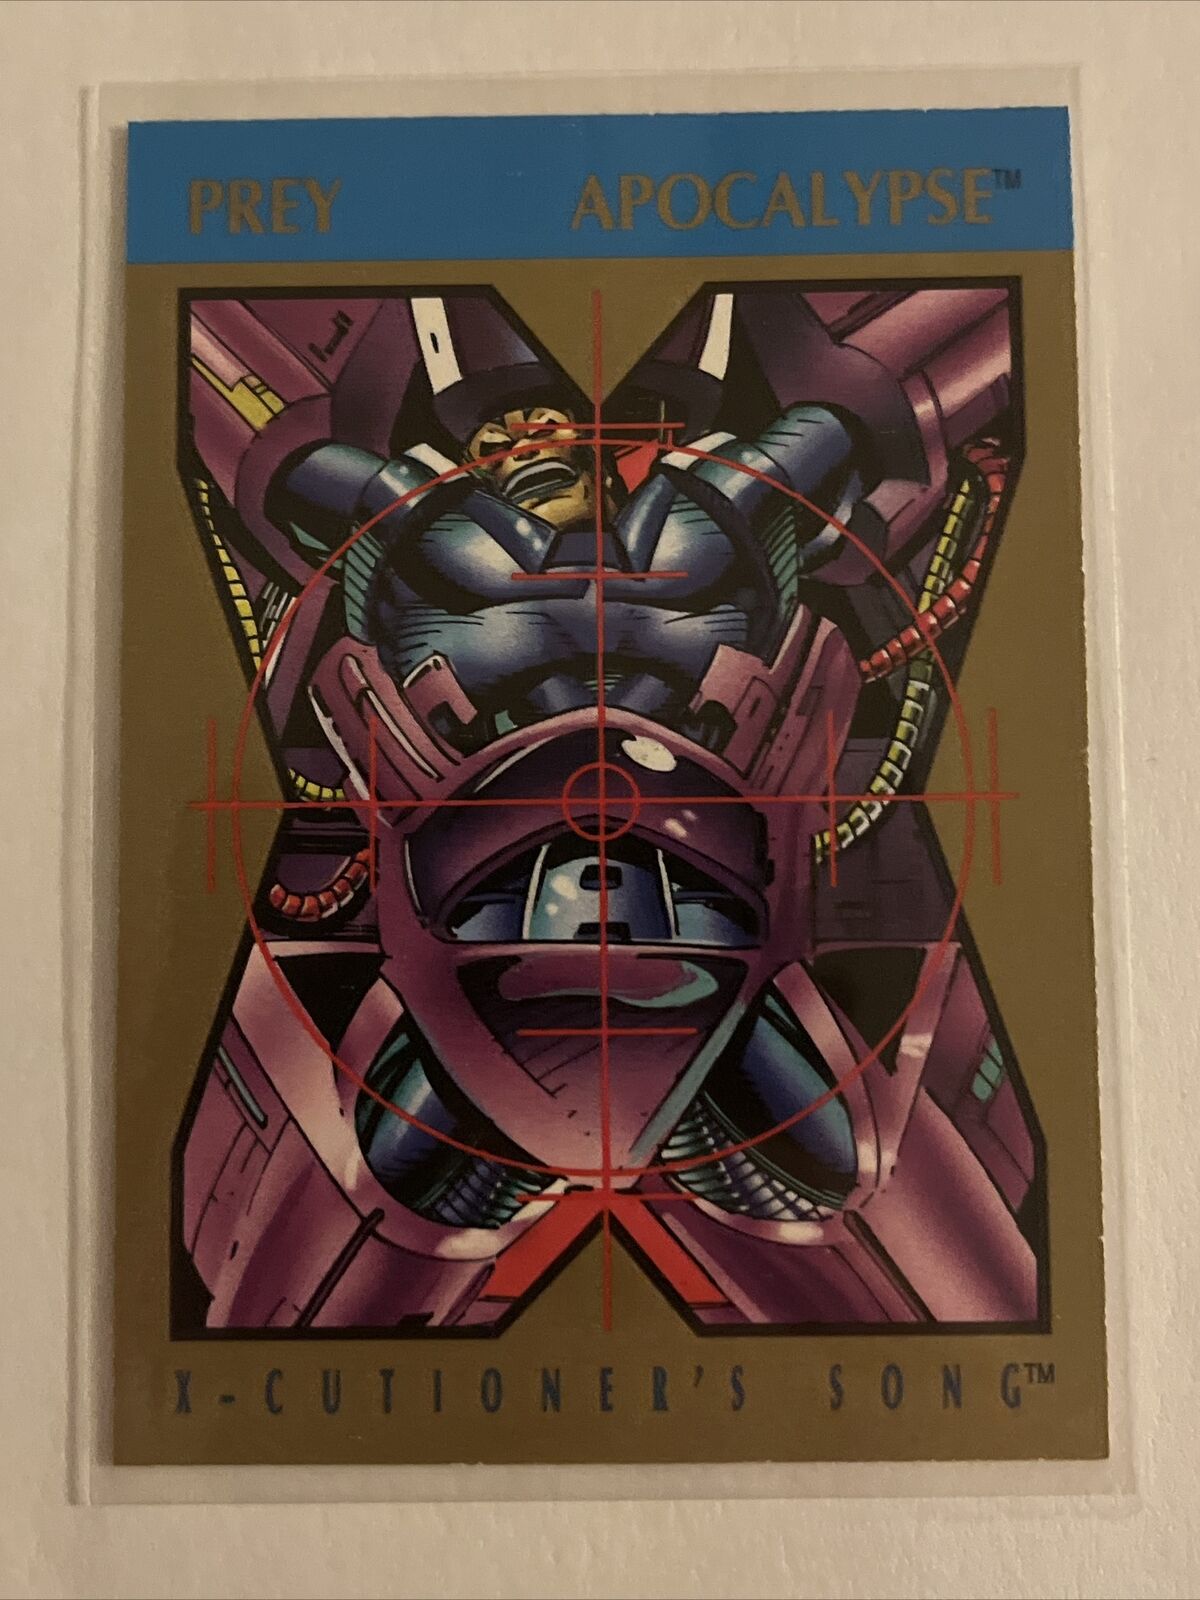 1992 X-CUTIONER'S SONG MARVEL COMIC BOOK CARD INSERT - # 3 APOCALYPSE (PREY)